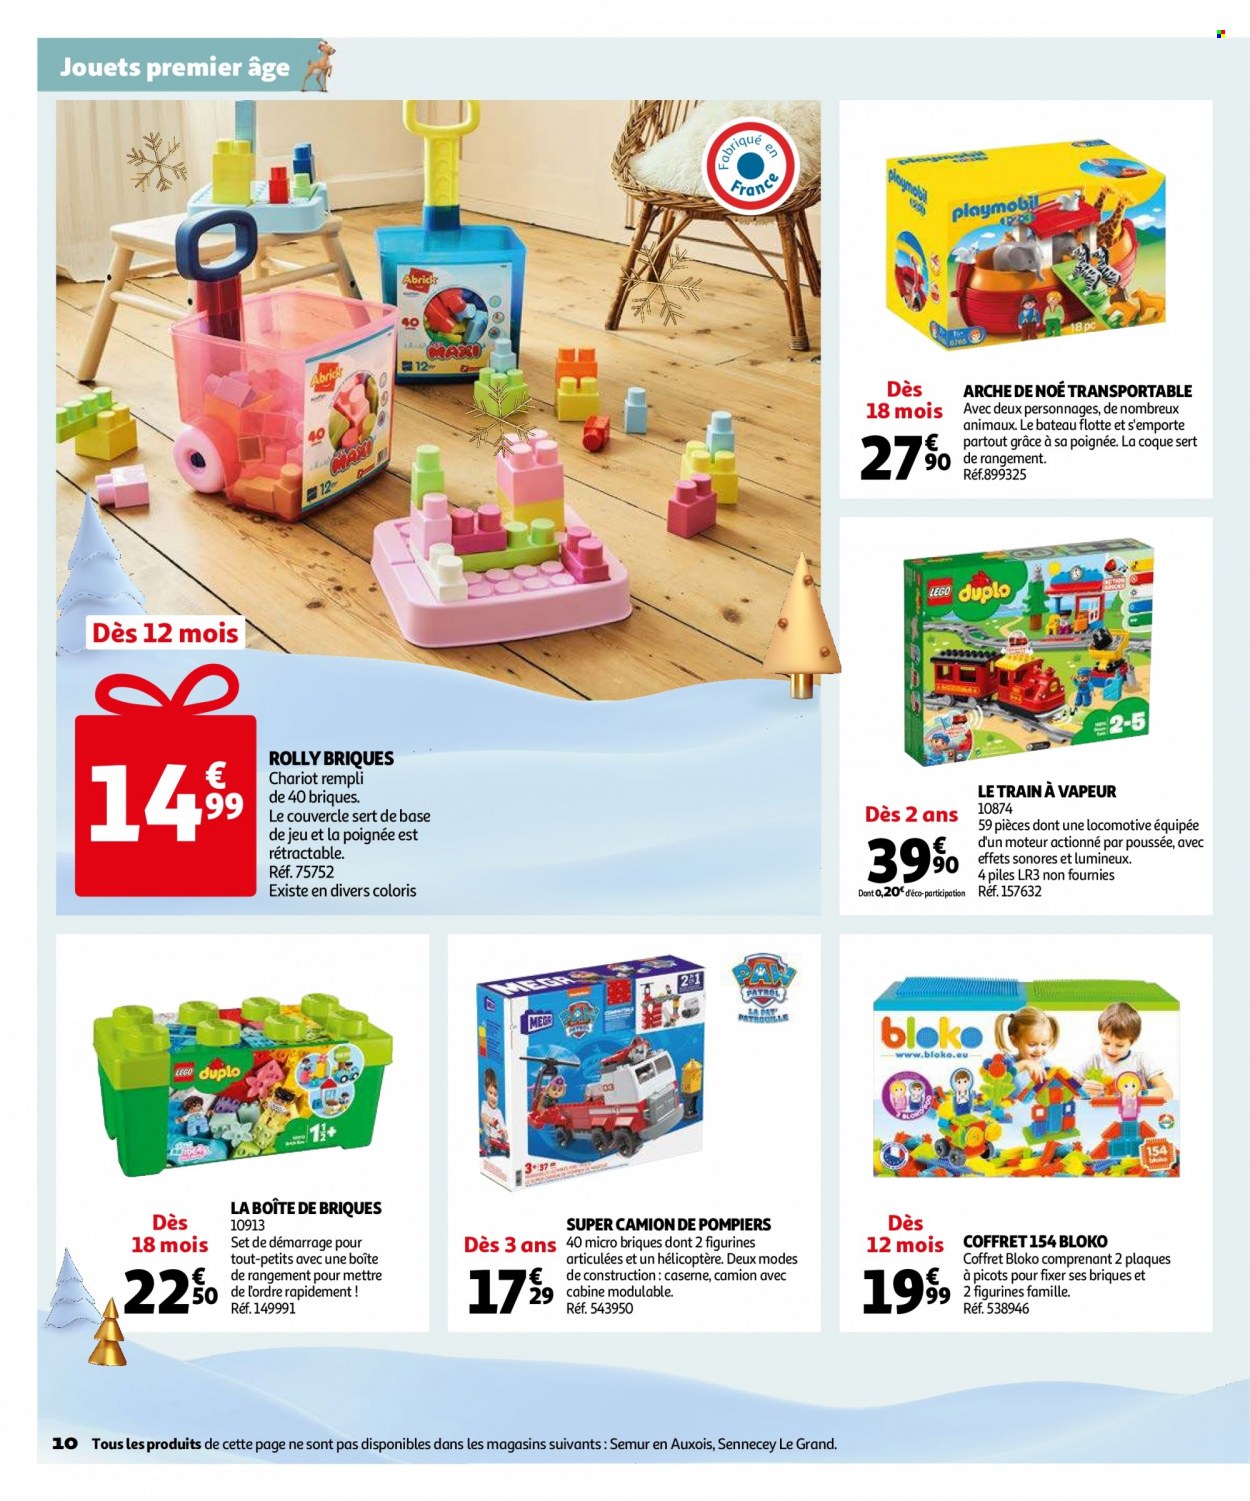 Catalogue Auchan - 14.10.2022 - 06.12.2022. 